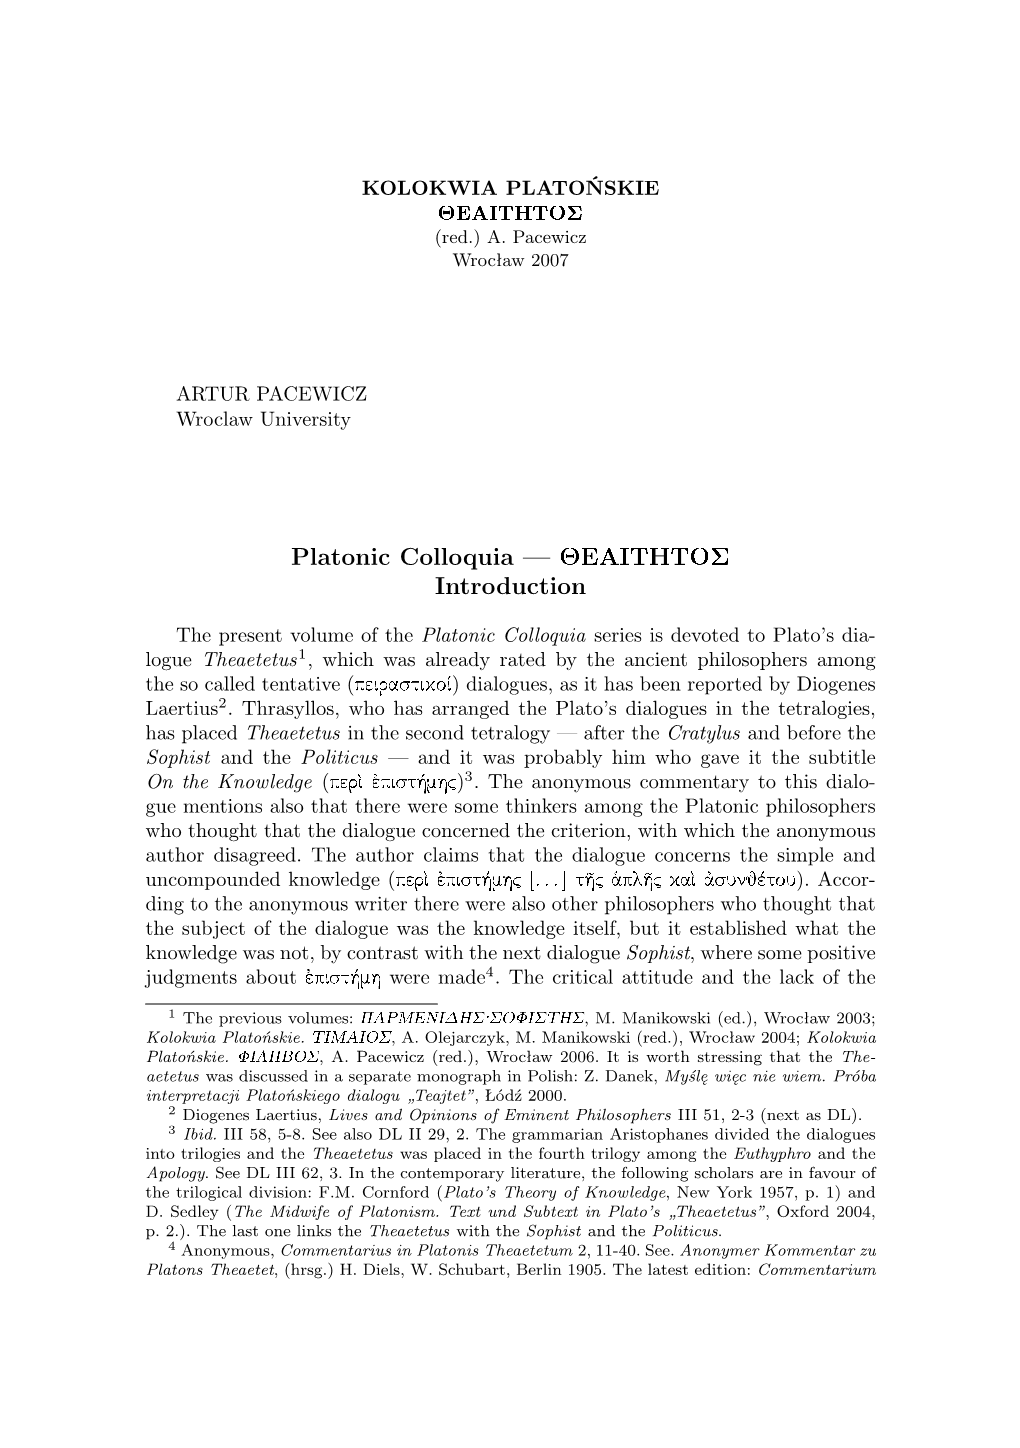 Platonic Colloquia — JEAITHTOS Introduction